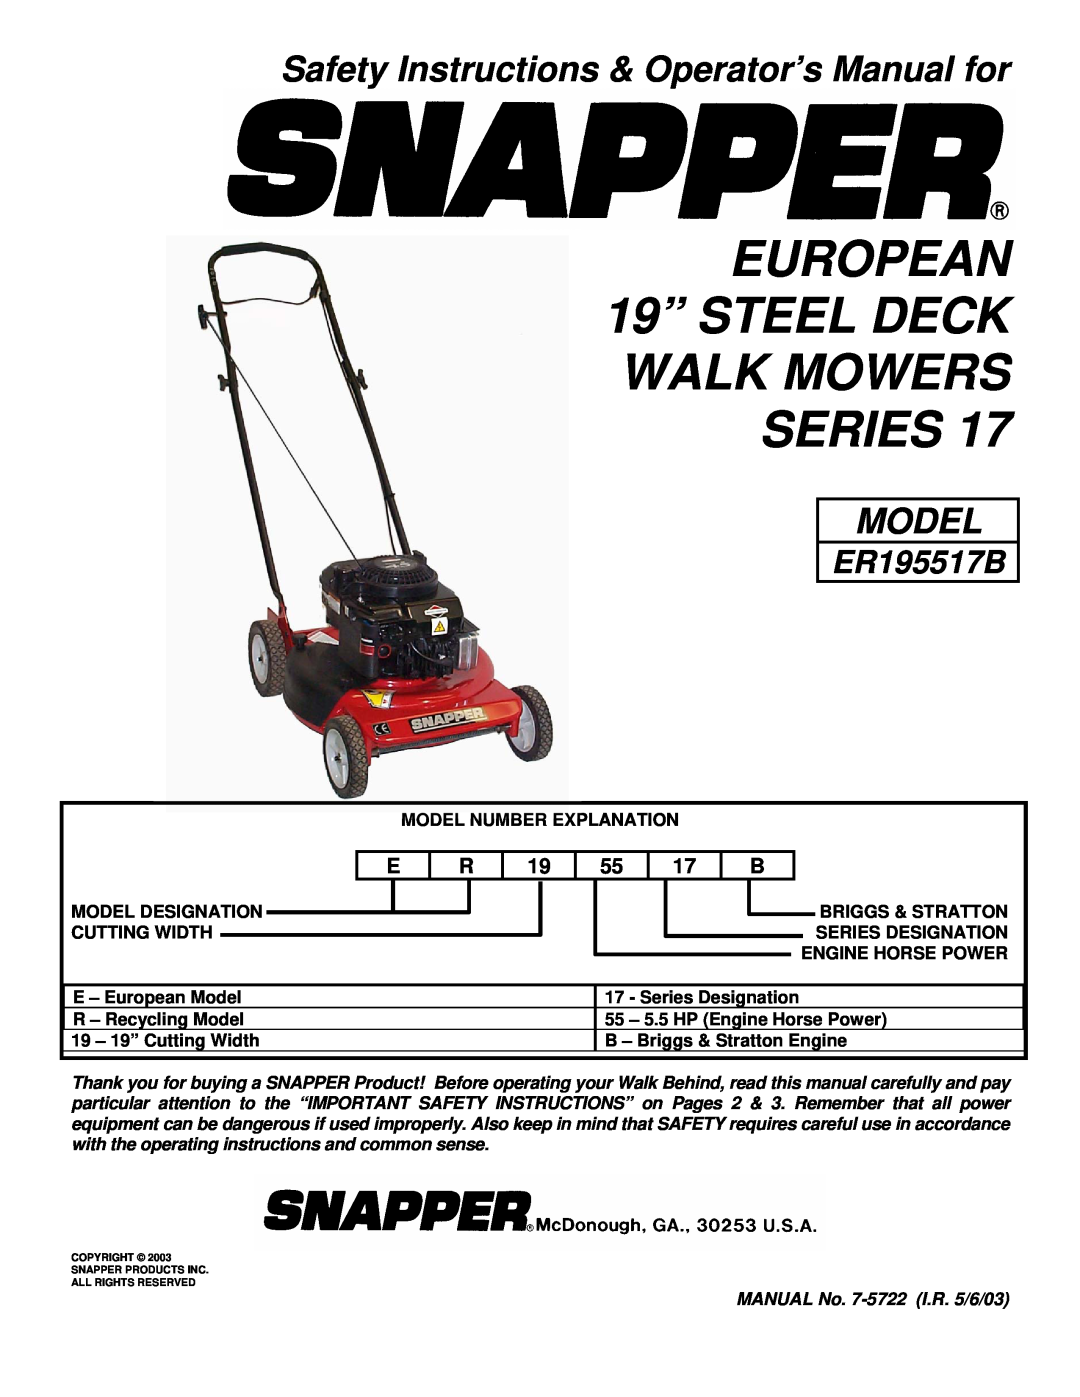 Snapper ER195517B important safety instructions EUROPEAN 19” STEEL DECK WALK MOWERS SERIES, Model 